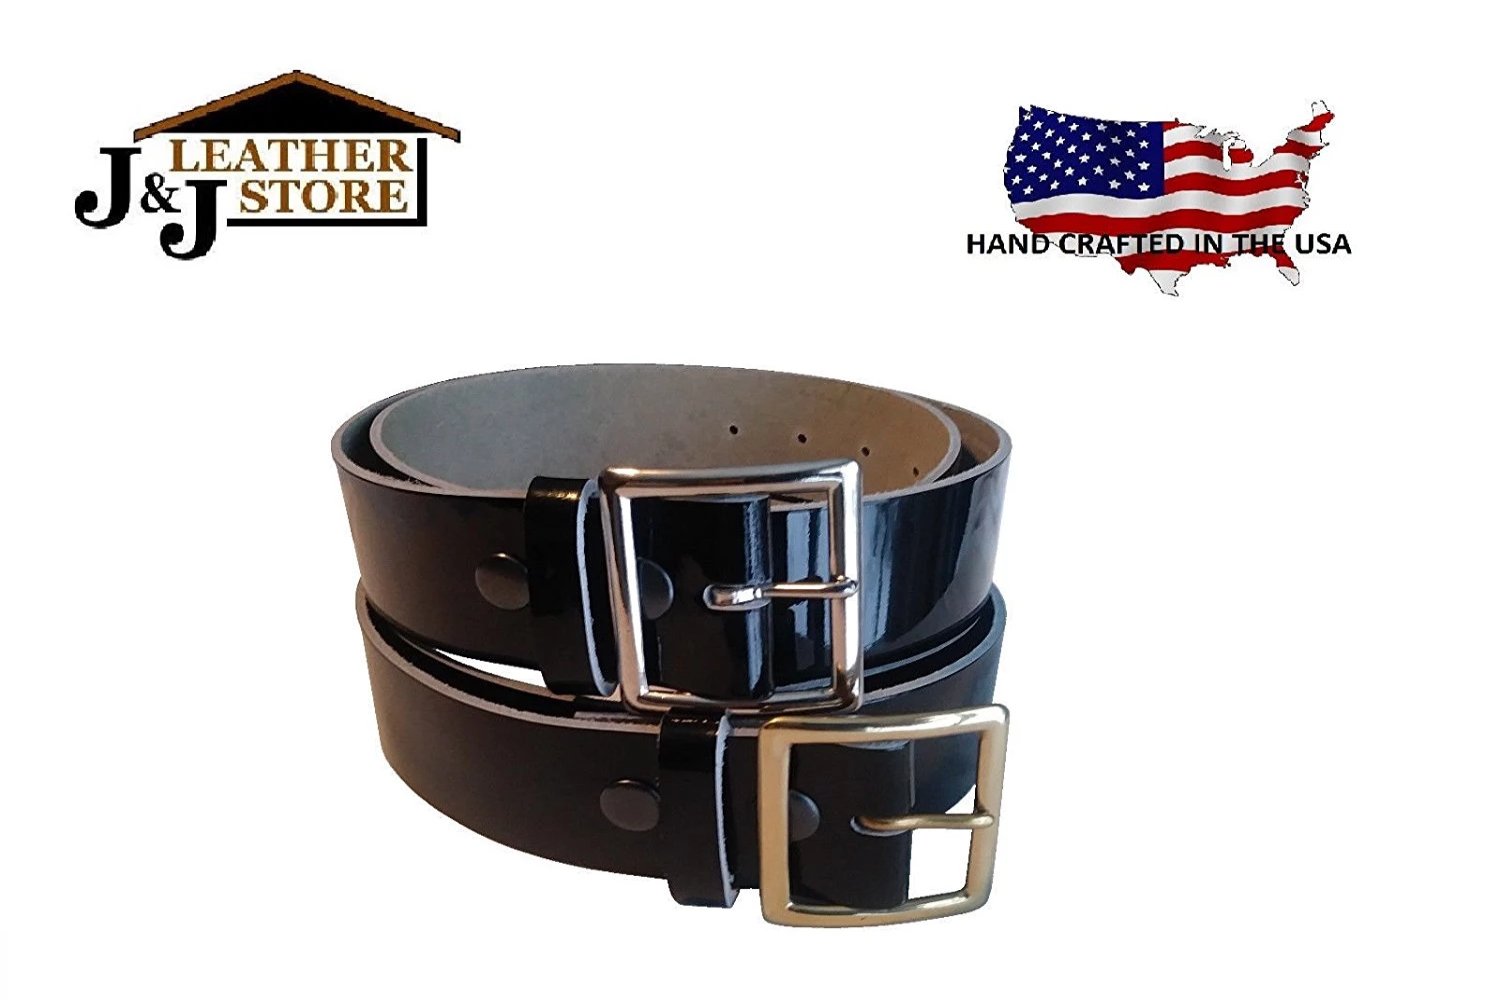 Champro A068 Patent Leather Belt - Black